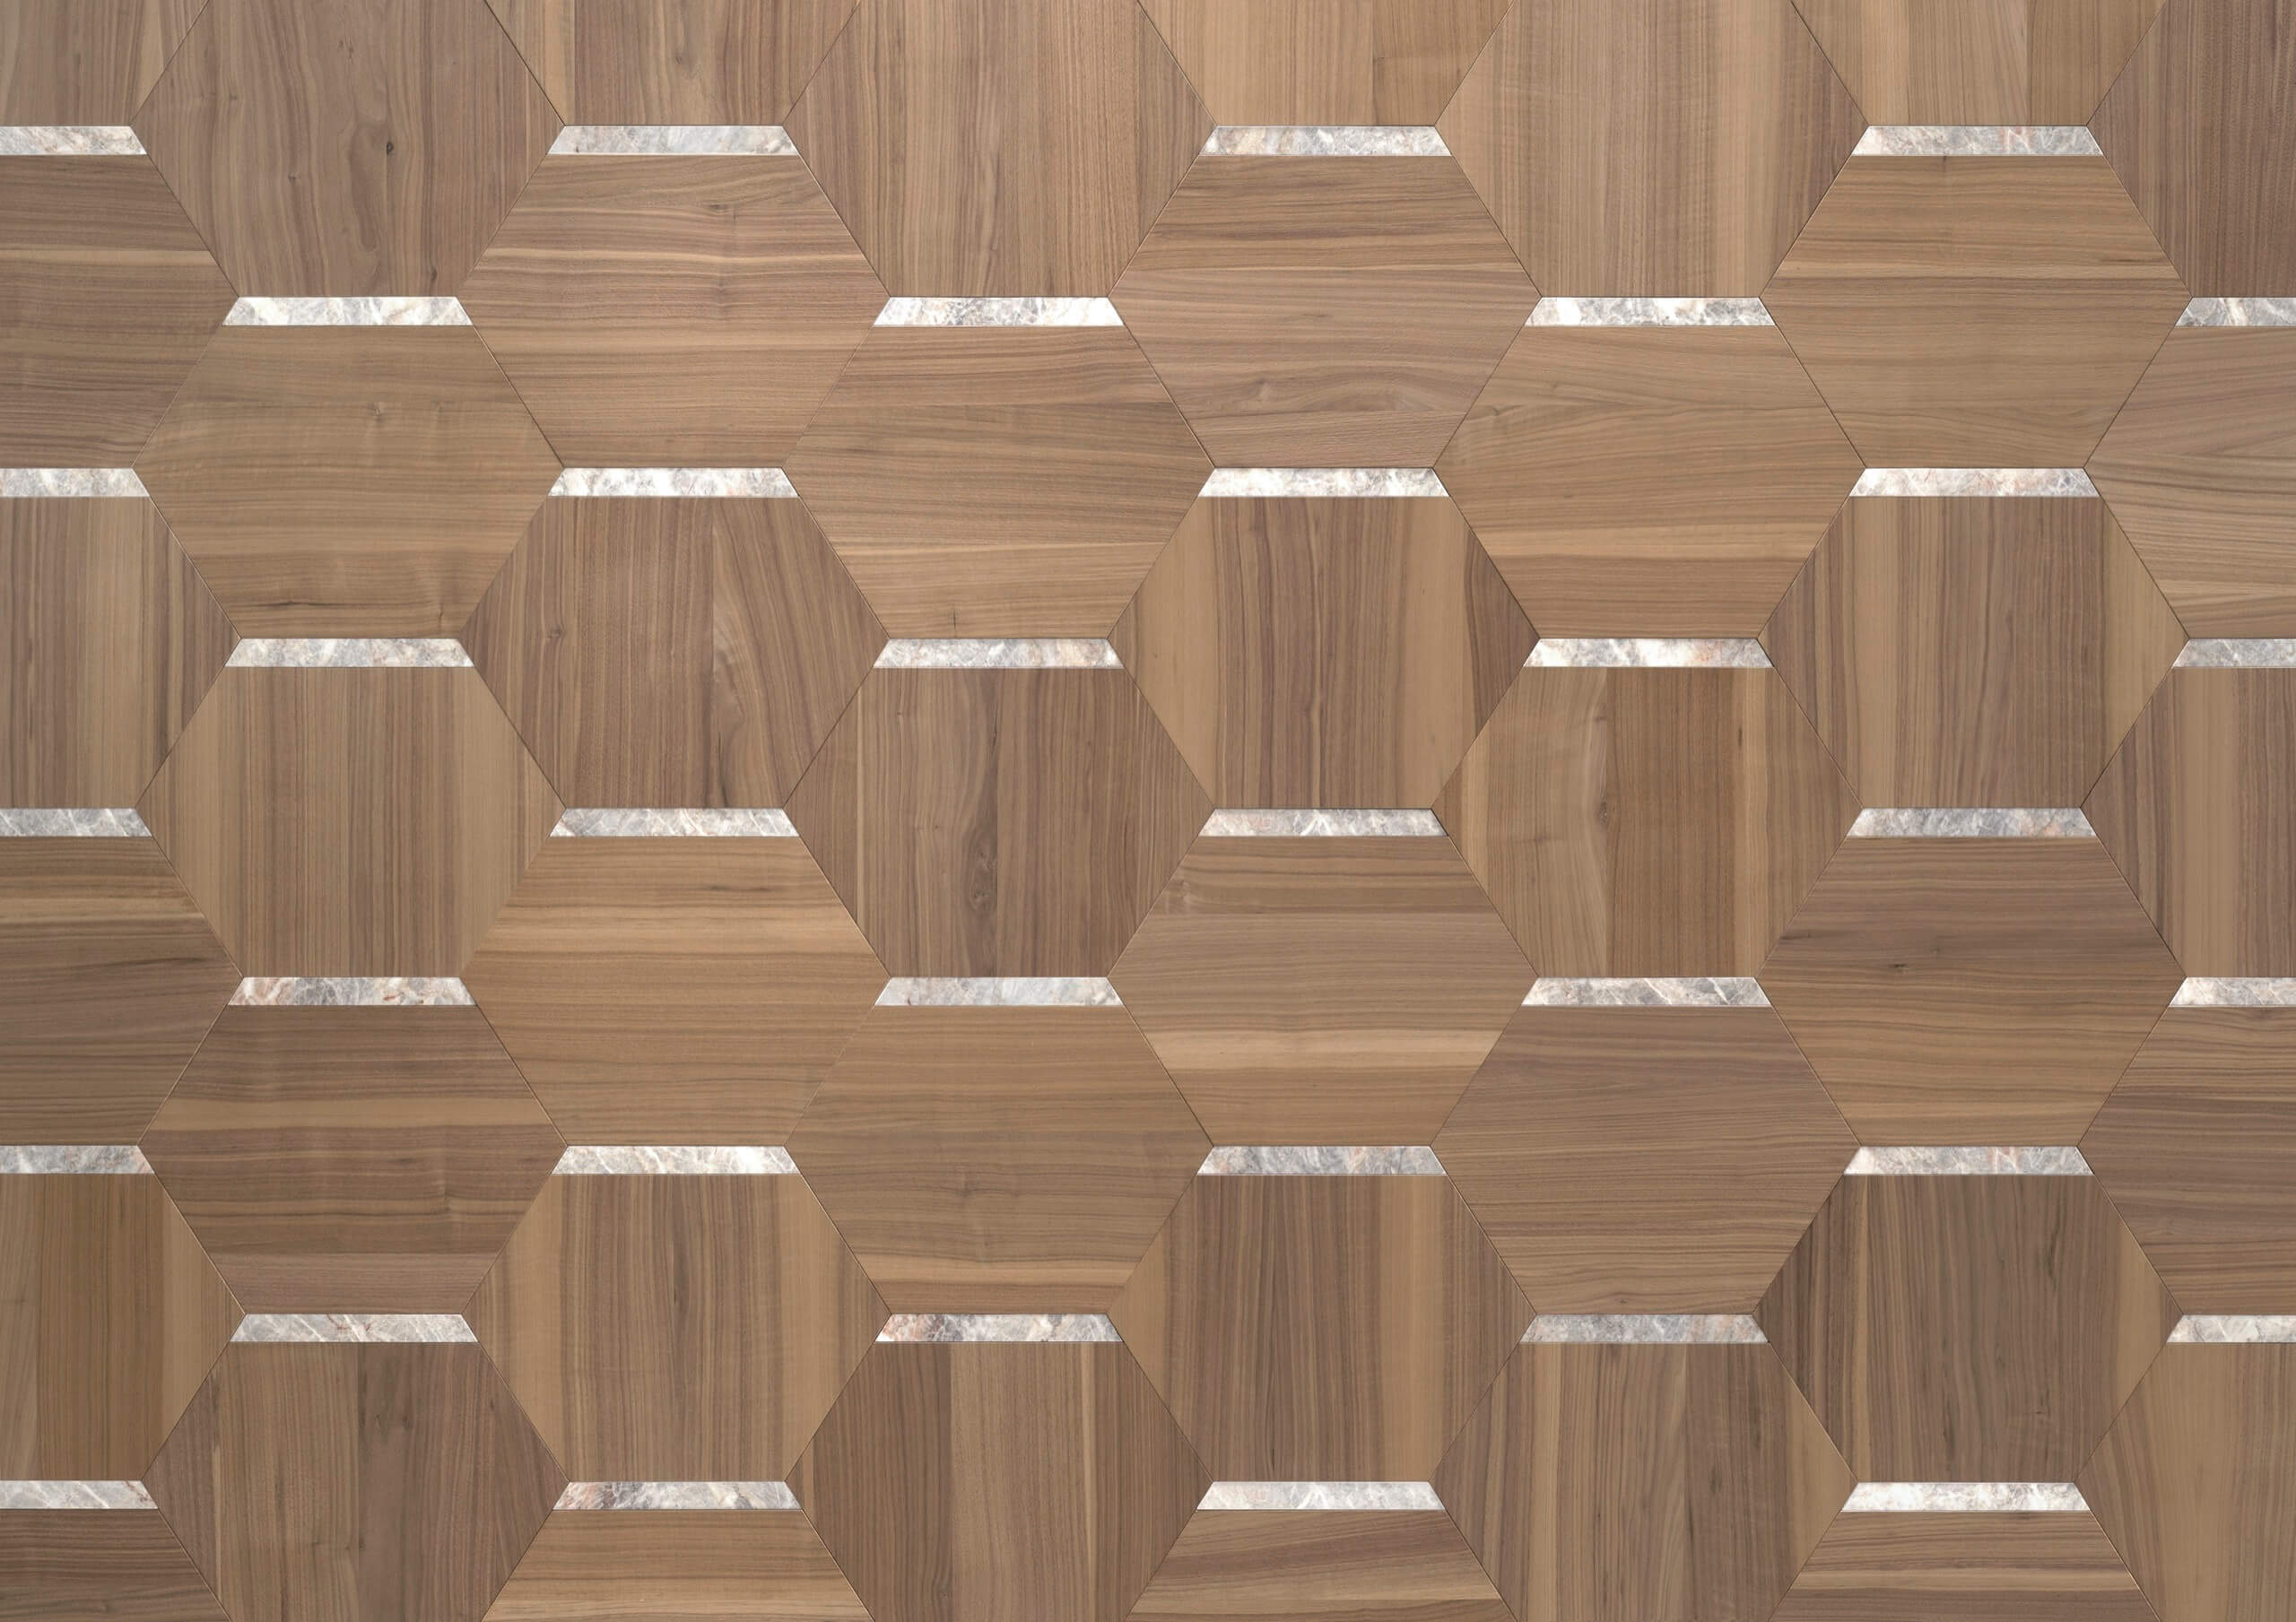 Alveo modular floor in Walnut or Oak wood.